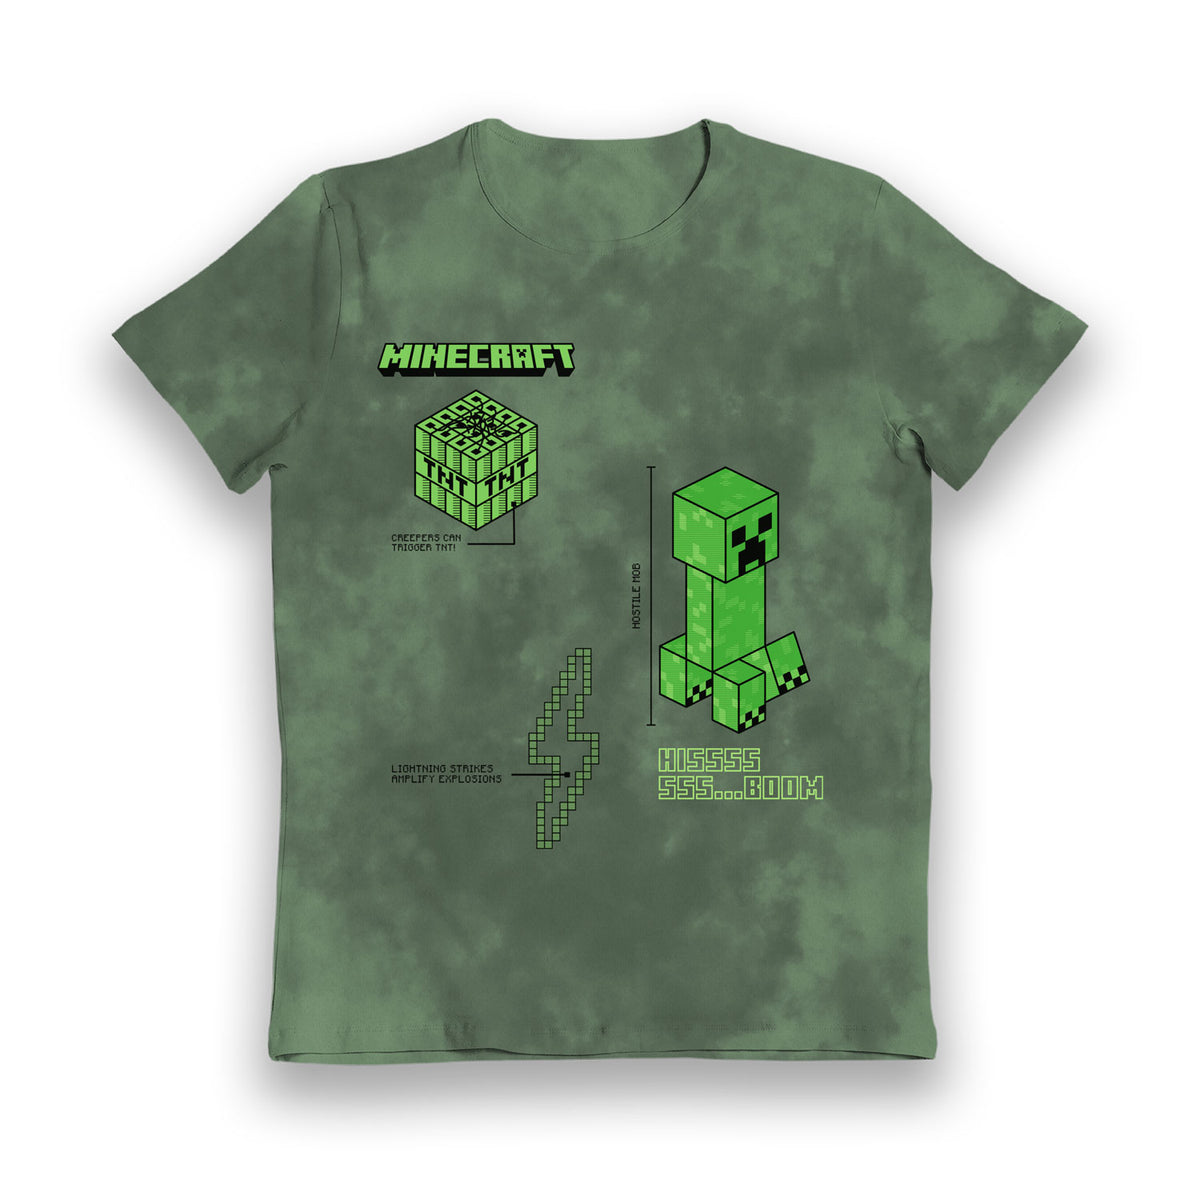 Minecraft Creeper Hissss Boom Tie Dye Kids T-Shirt - Bulk Buy